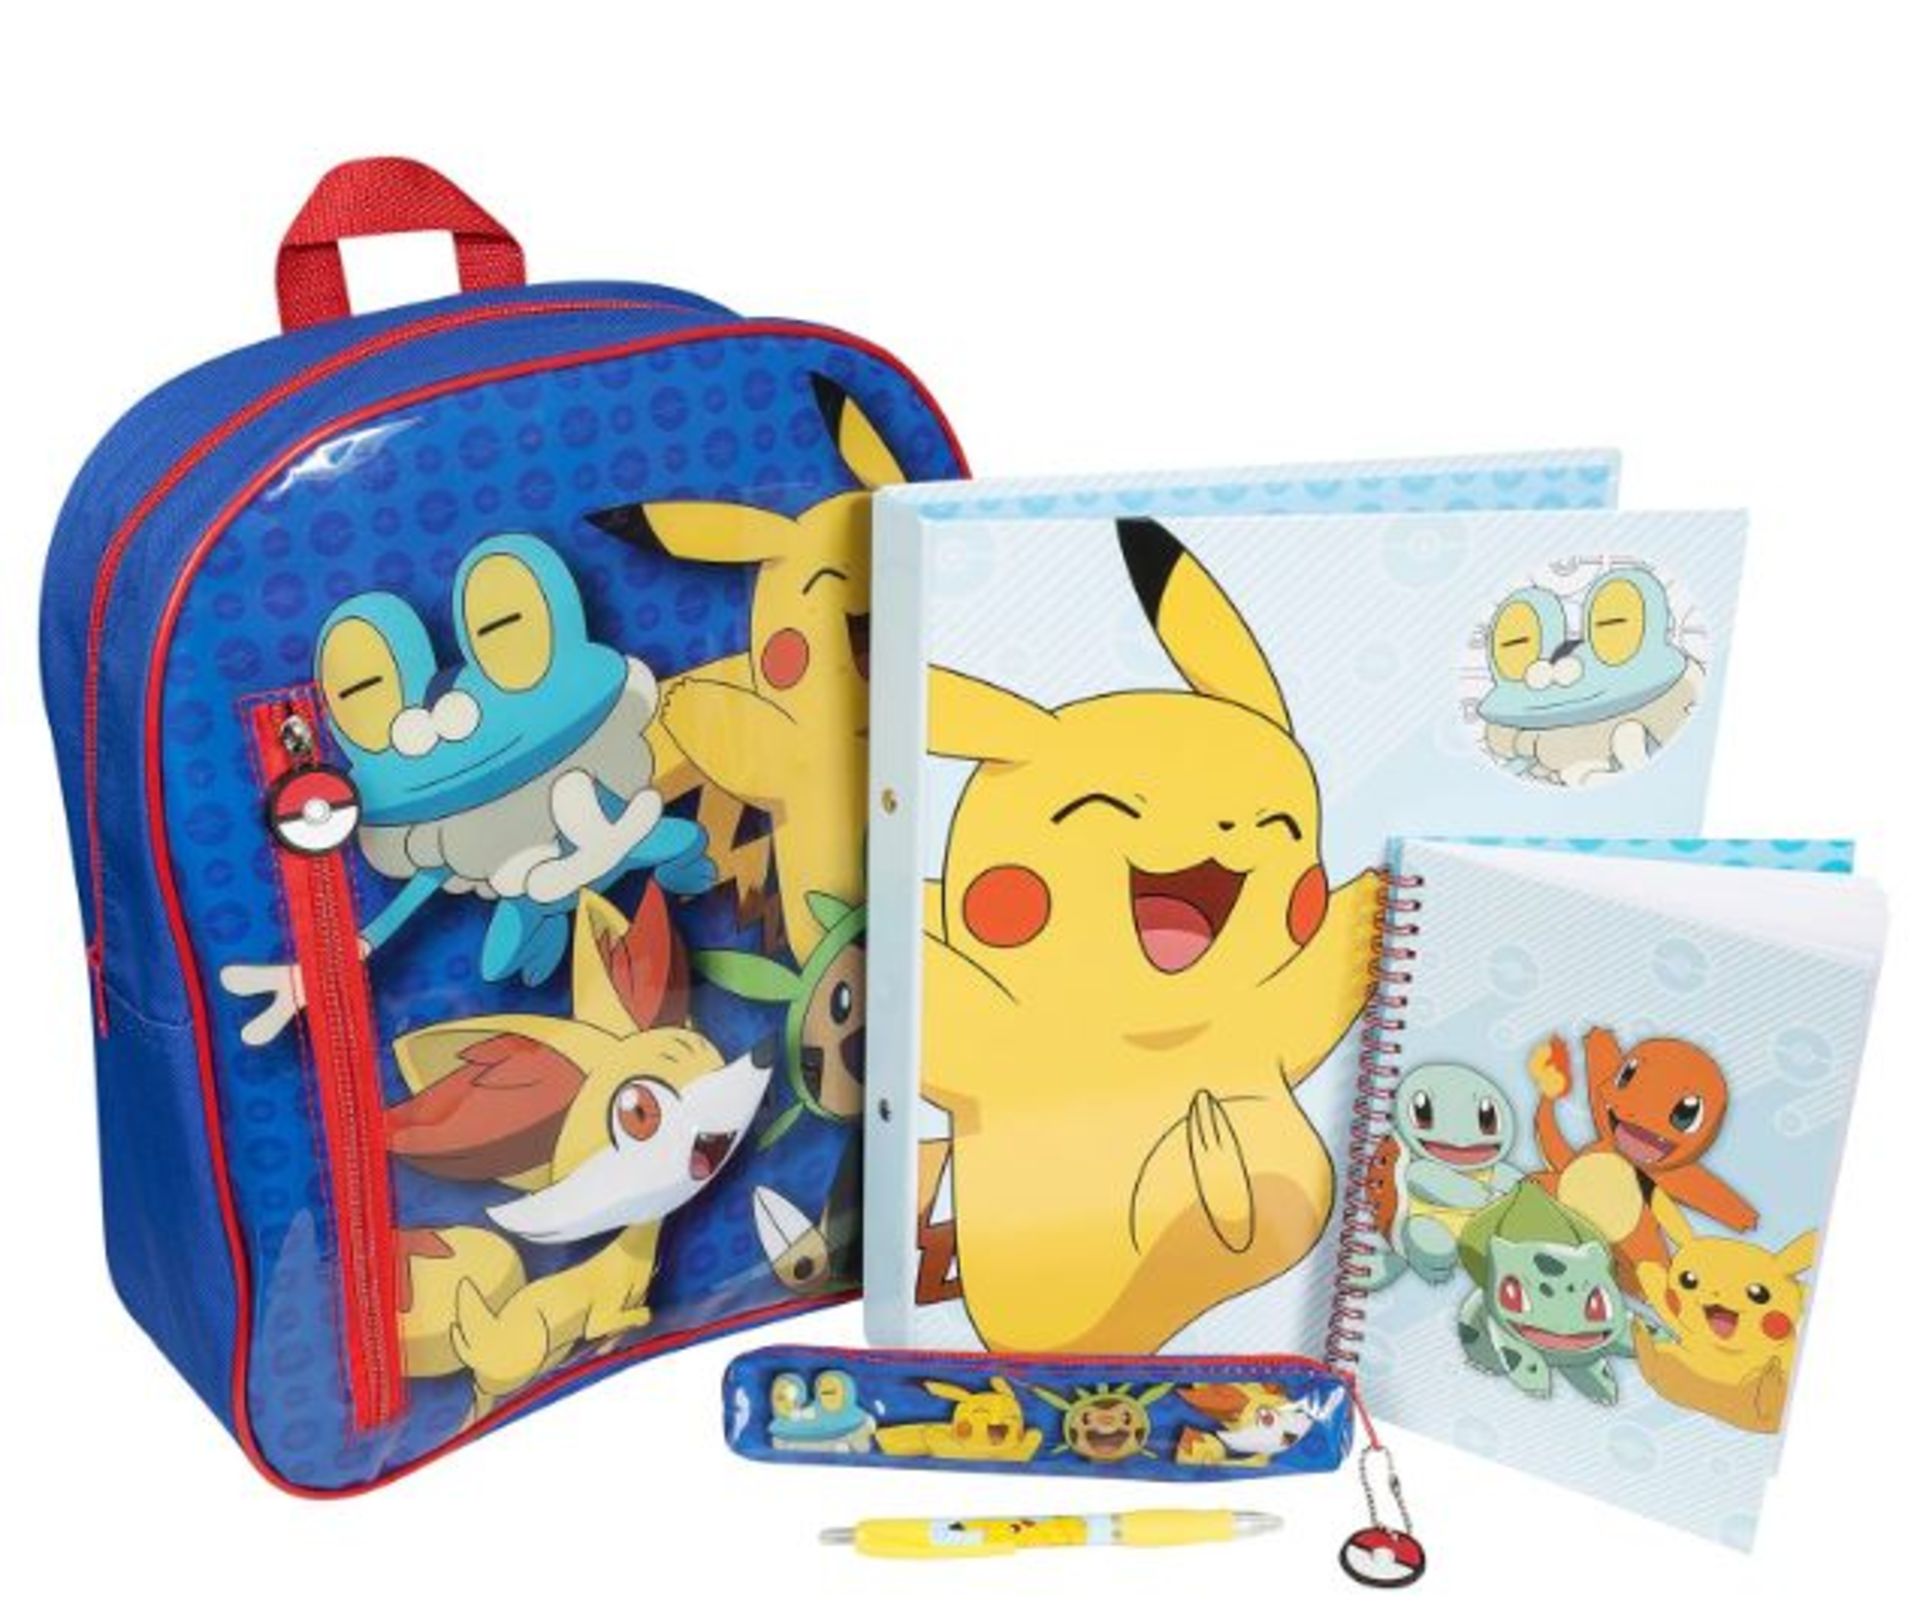 72 x Pokémon filled Backpacks RRP £16. - Image 2 of 2